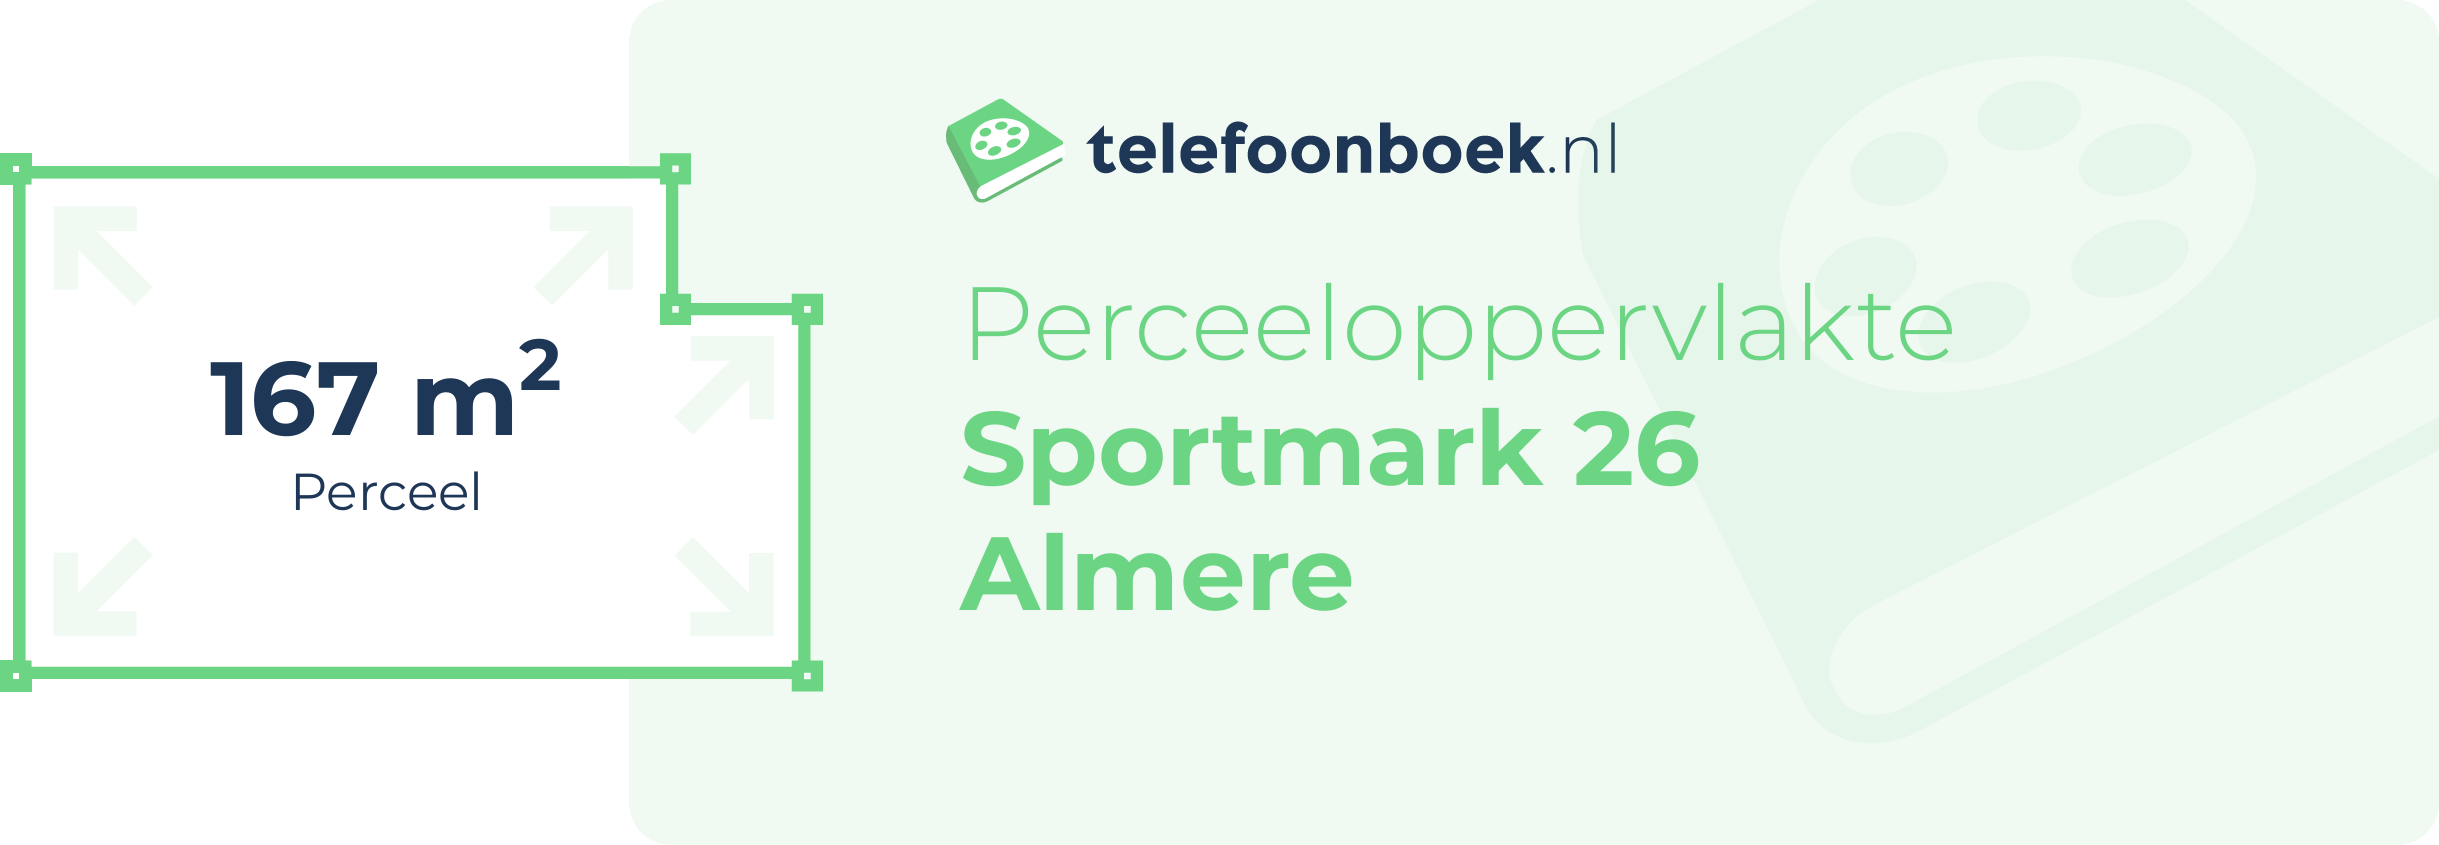 Perceeloppervlakte Sportmark 26 Almere